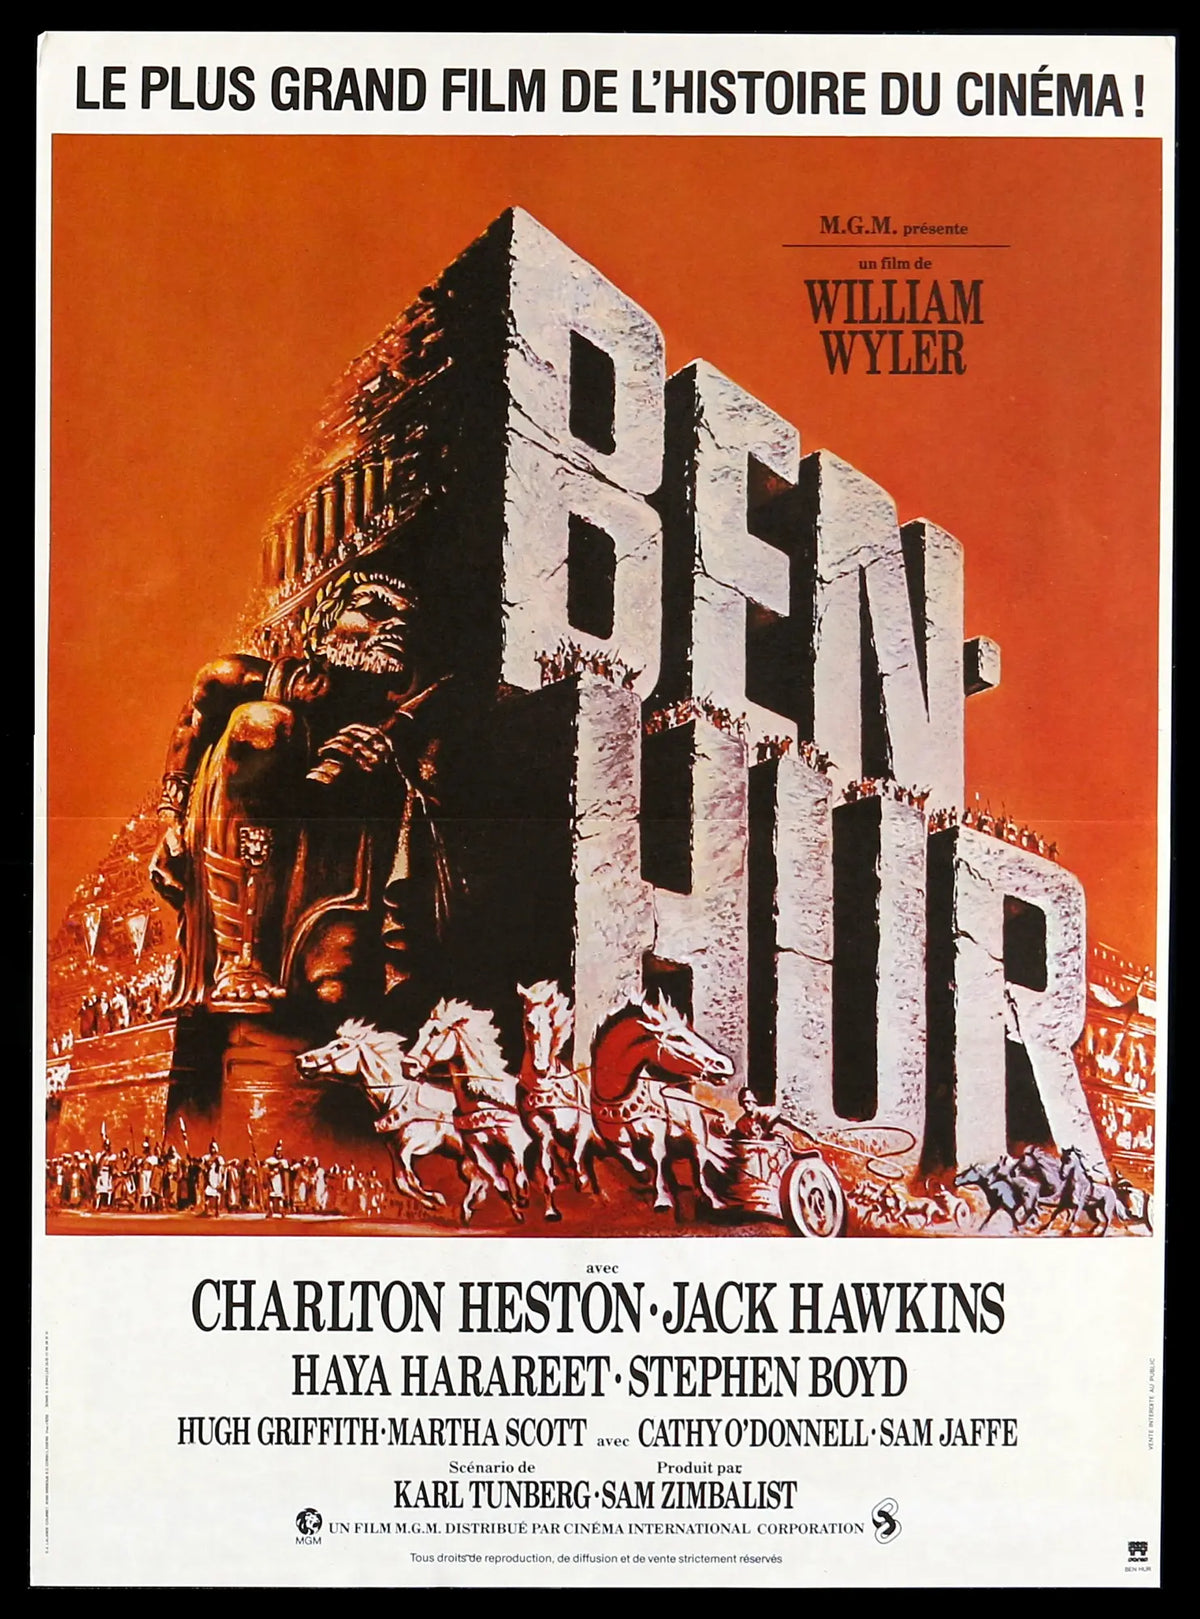 Ben Hur (1959) original movie poster for sale at Original Film Art